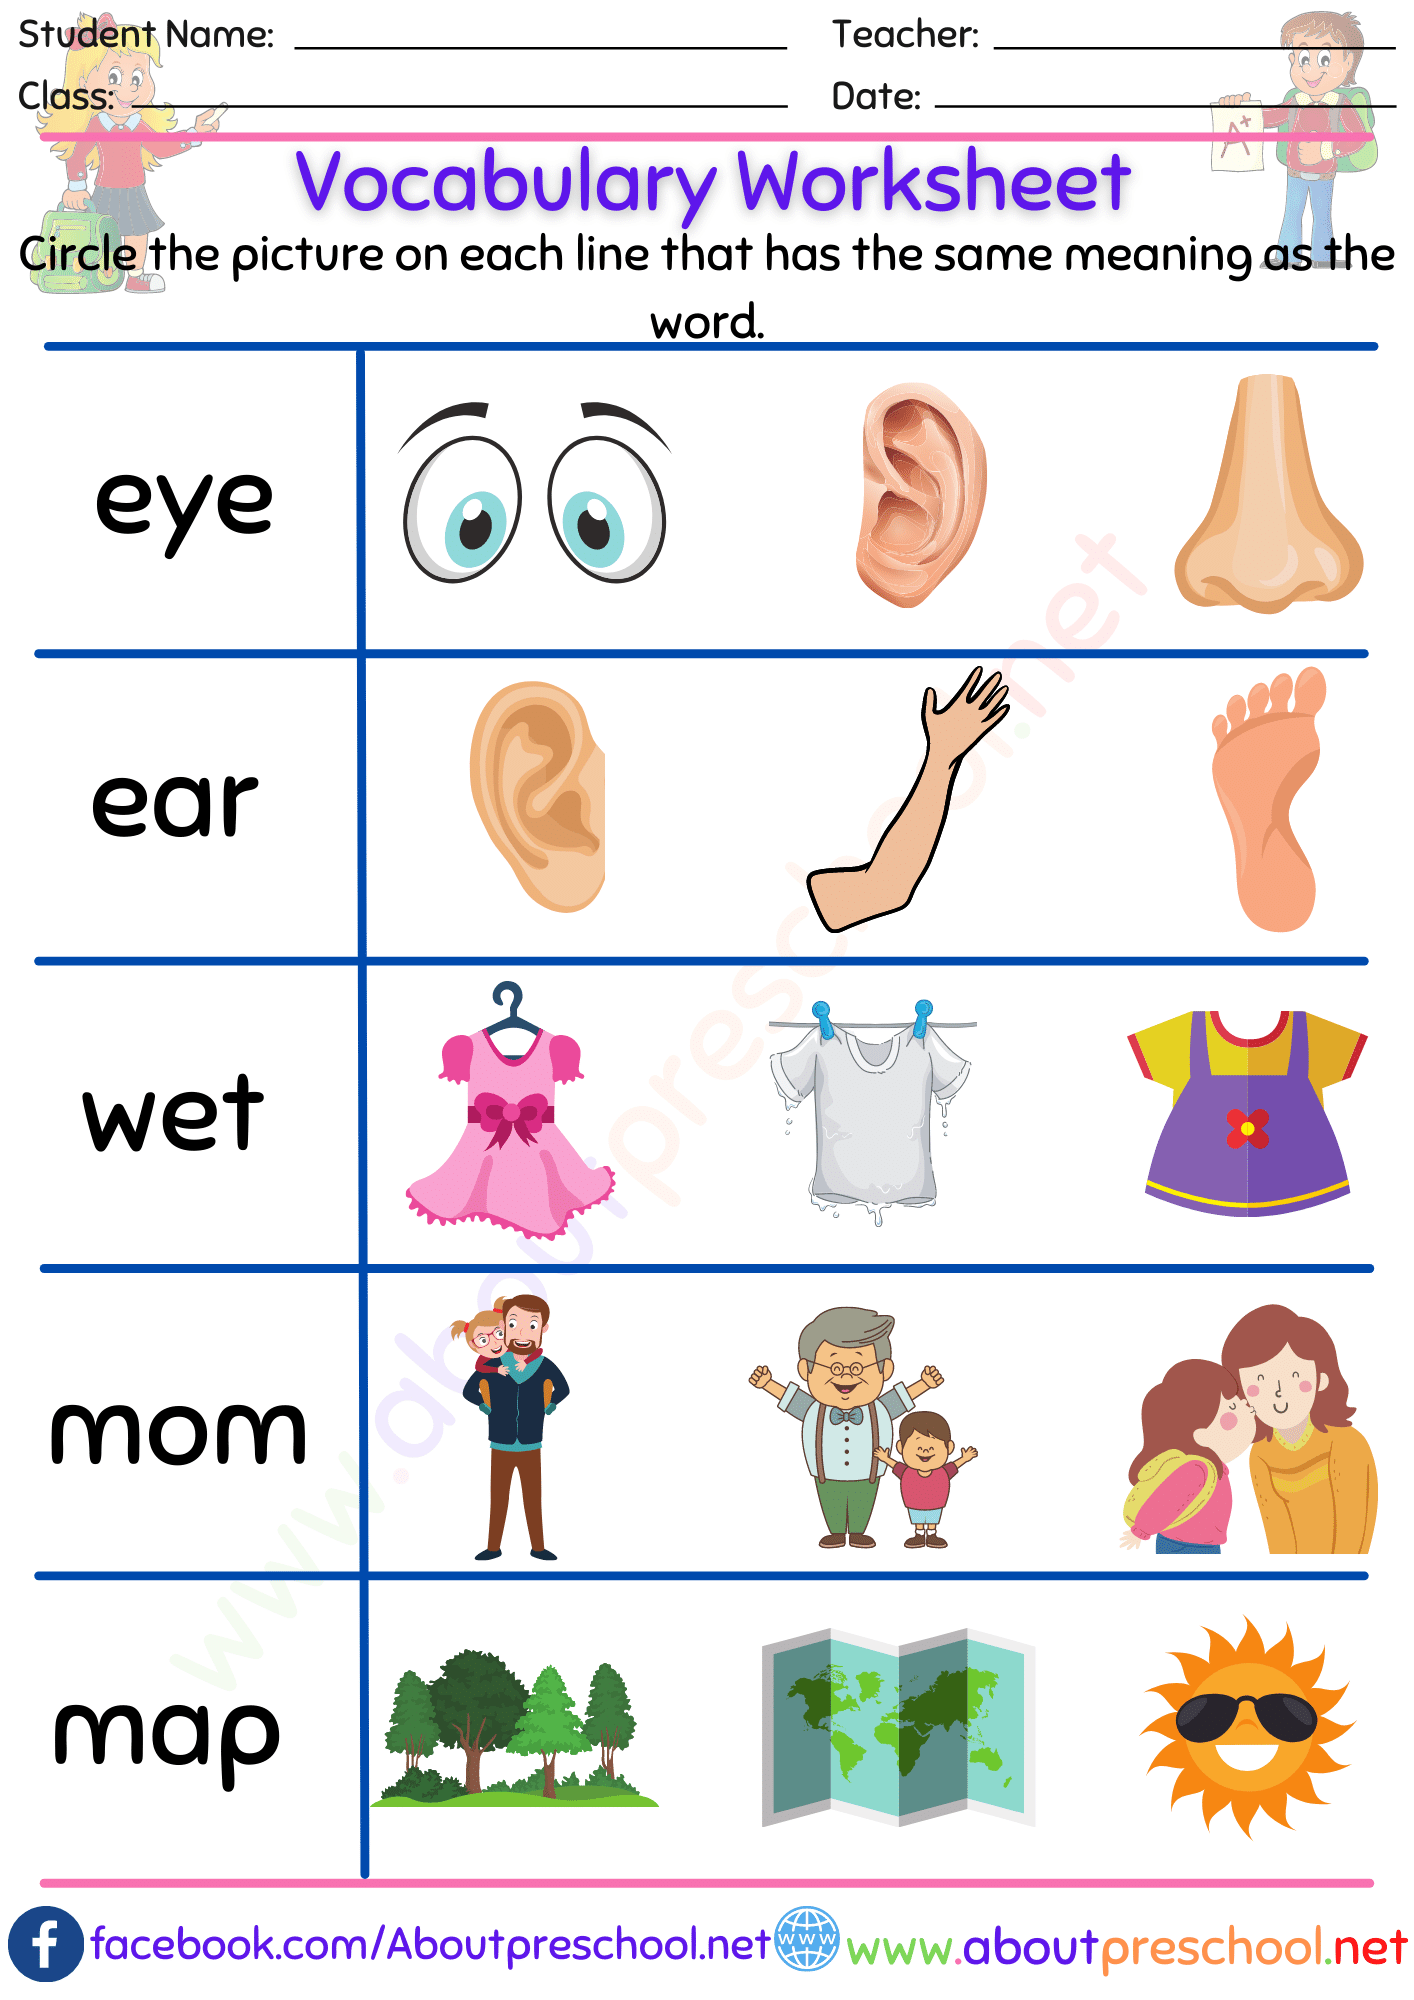 Vocabulary Worksheet-7